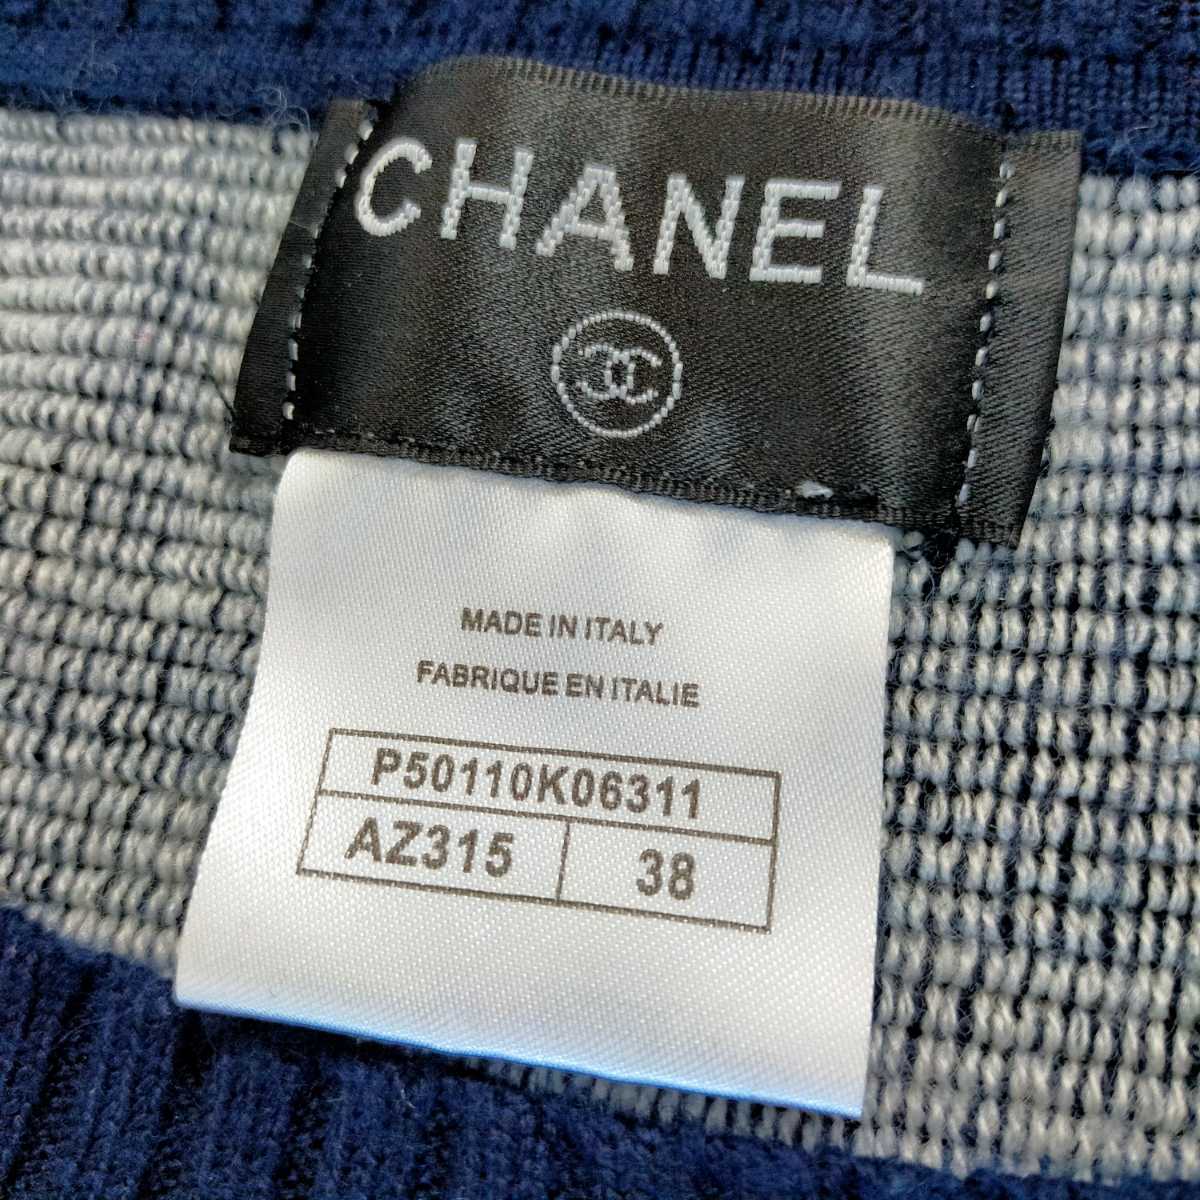  Chanel sweater 38 number cashmere regular goods / beautiful goods 